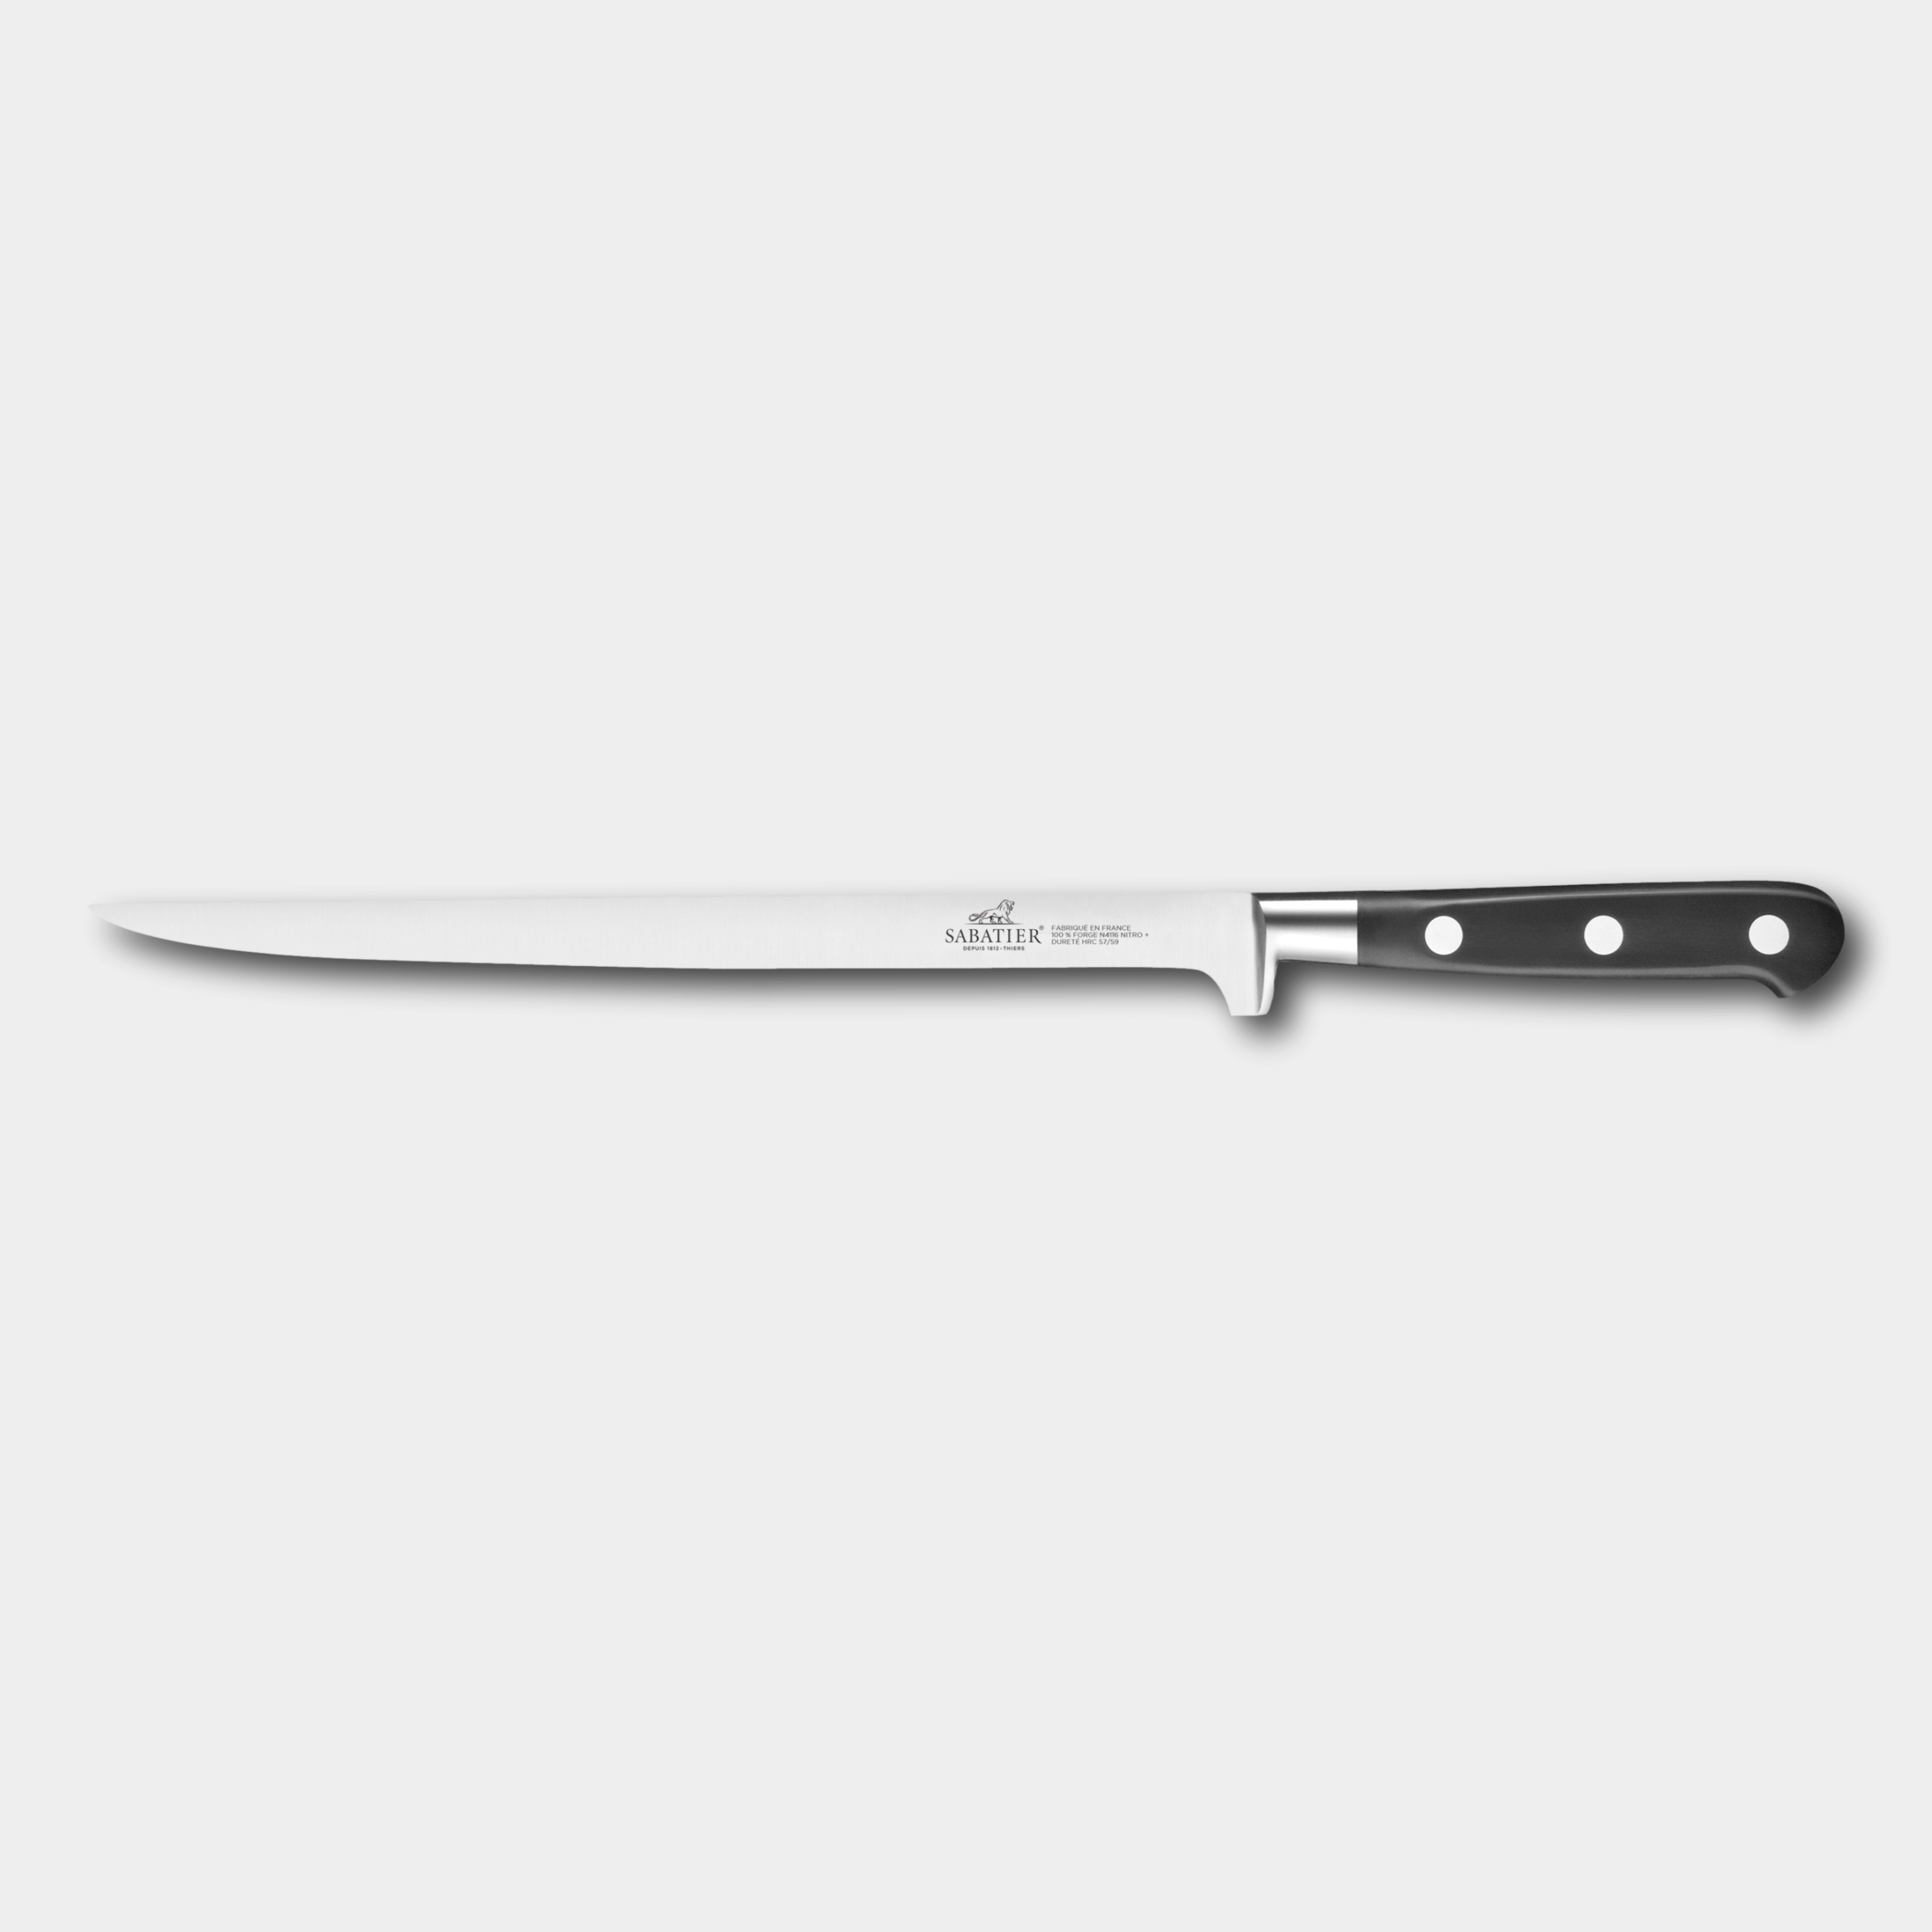 Lion Sabtier Ideal Steel 22cm Swedish Salmon Knife